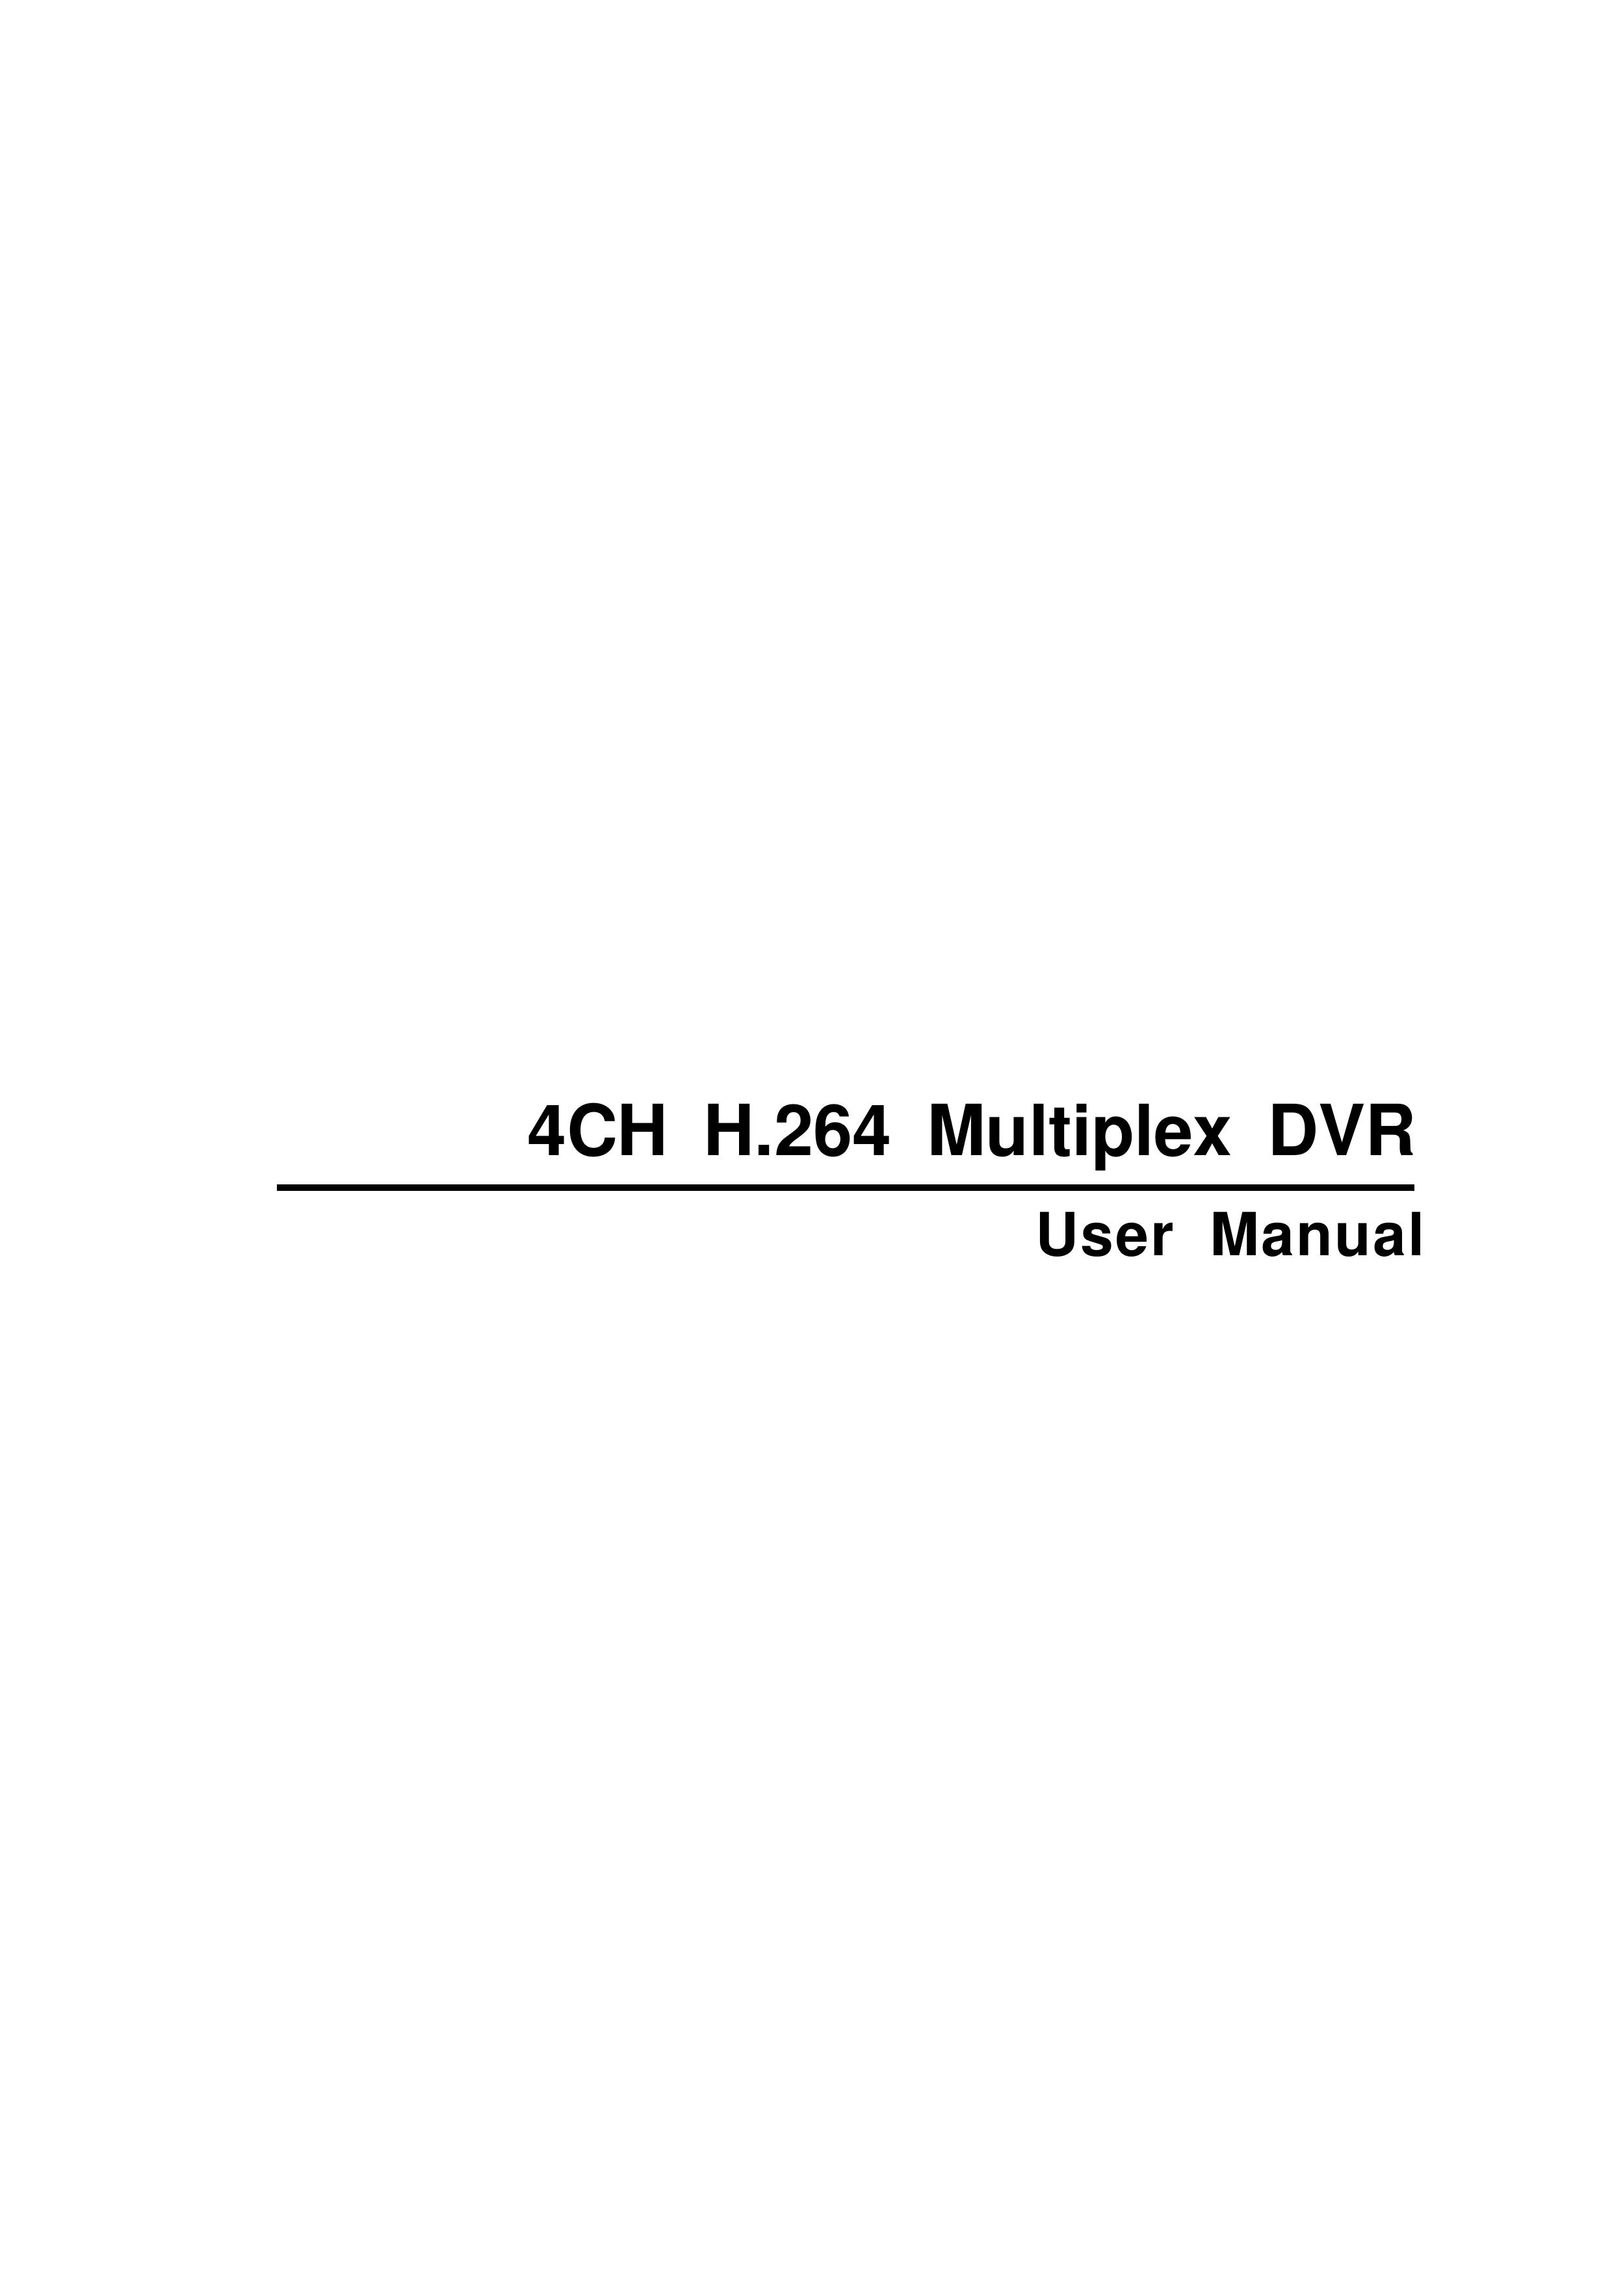 Multiplex Technology 4CH H.264 DVR User Manual